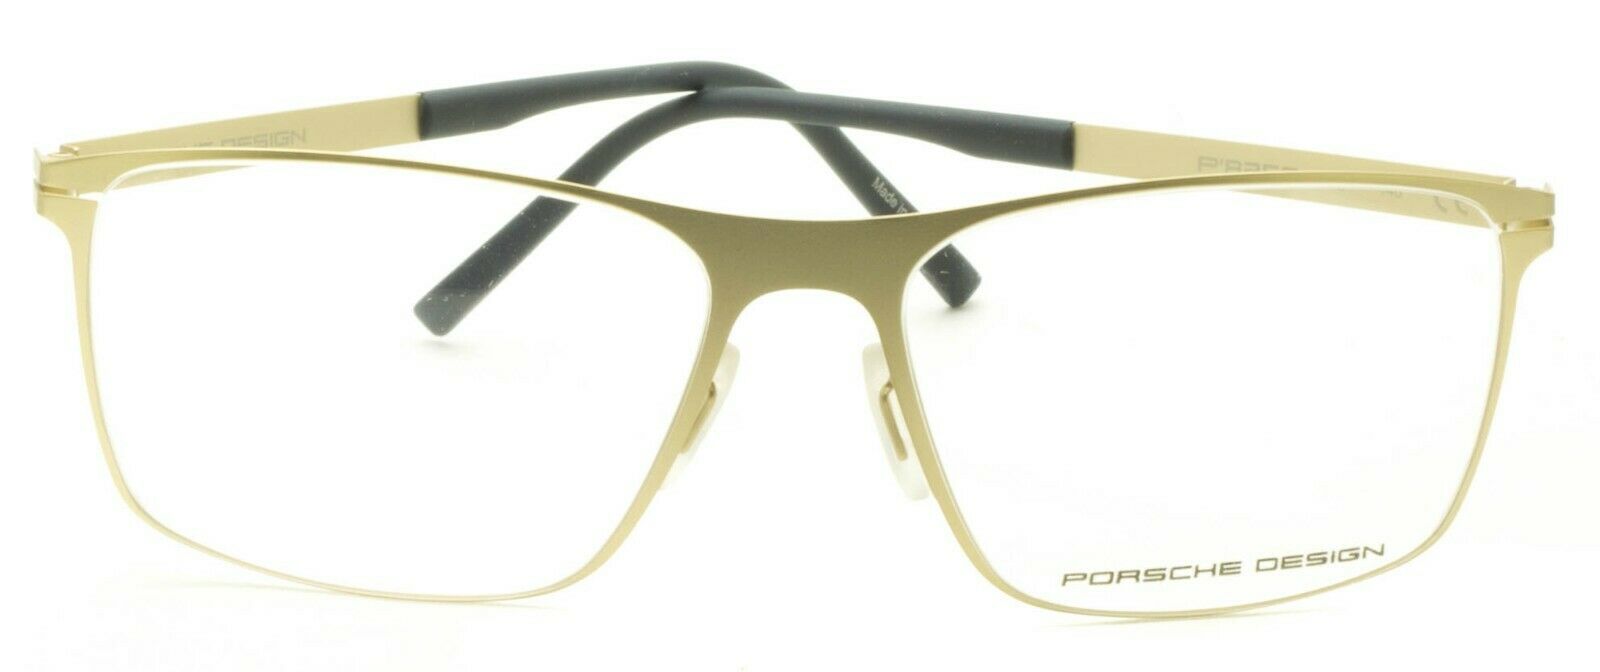 PORSCHE DESIGN P8256 B Eyewear RX Optical FRAMES Glasses Eyeglasses ITALY - New